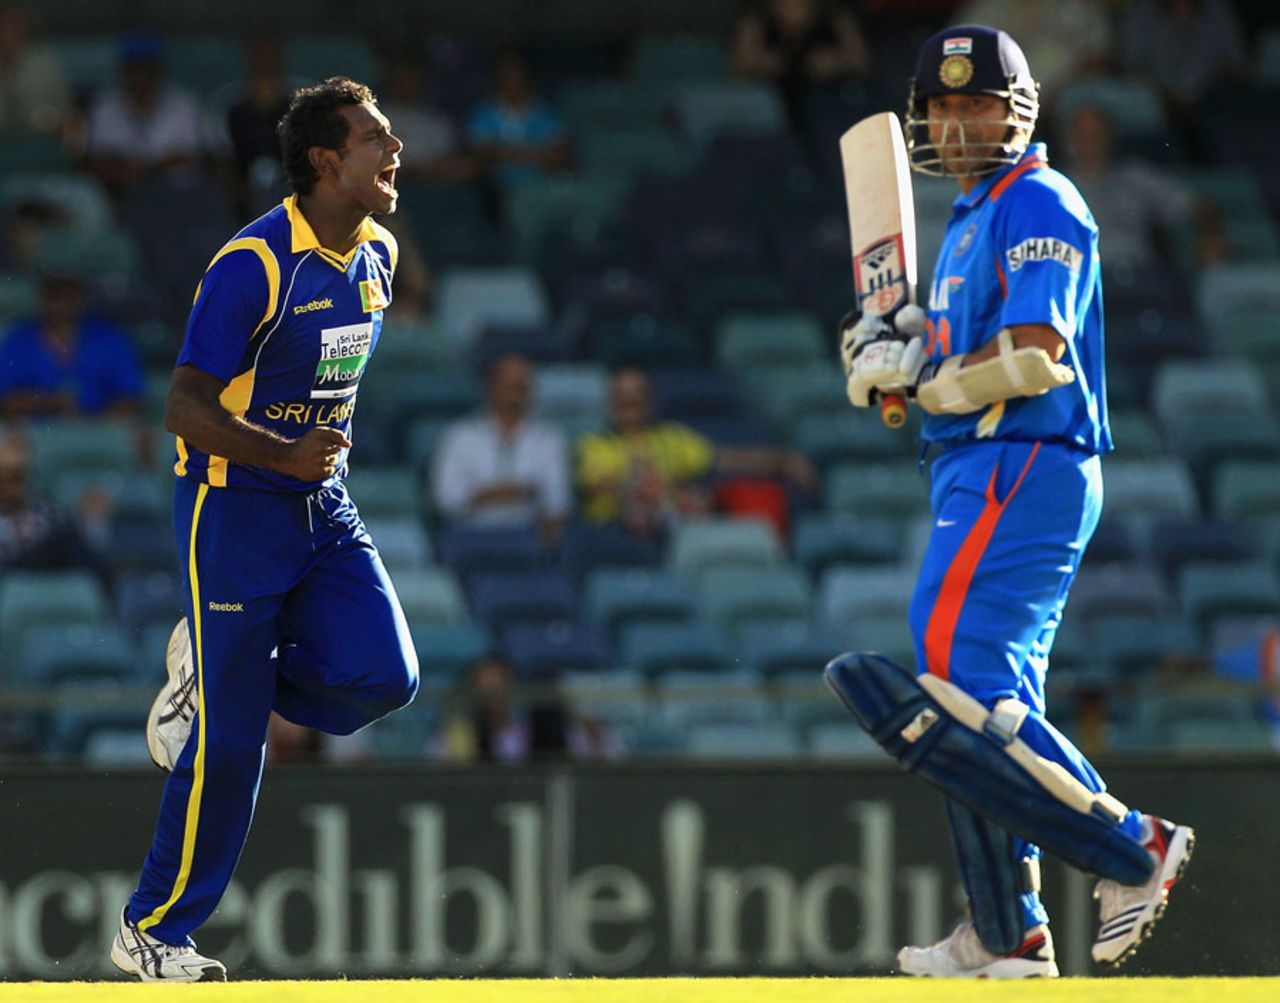 Angelo Mathews celebrates dismissing Sachin Tendulkar, India v Sri Lanka, CB Series, 2nd ODI, Perth, February 8, 2012